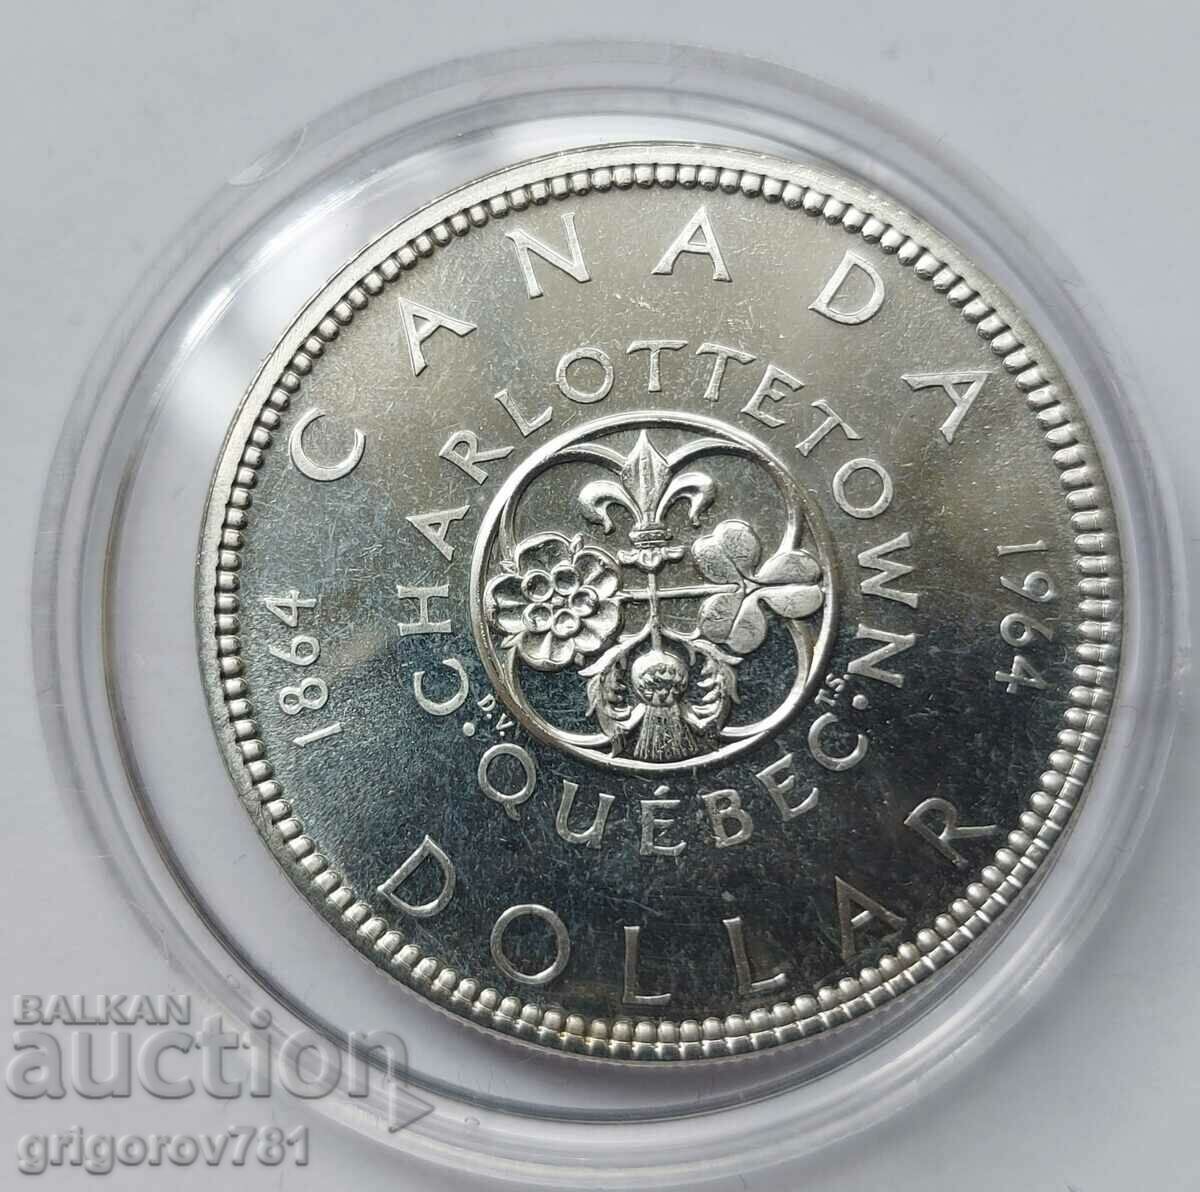 1 dolar argint Canada 1964 - monedă de argint